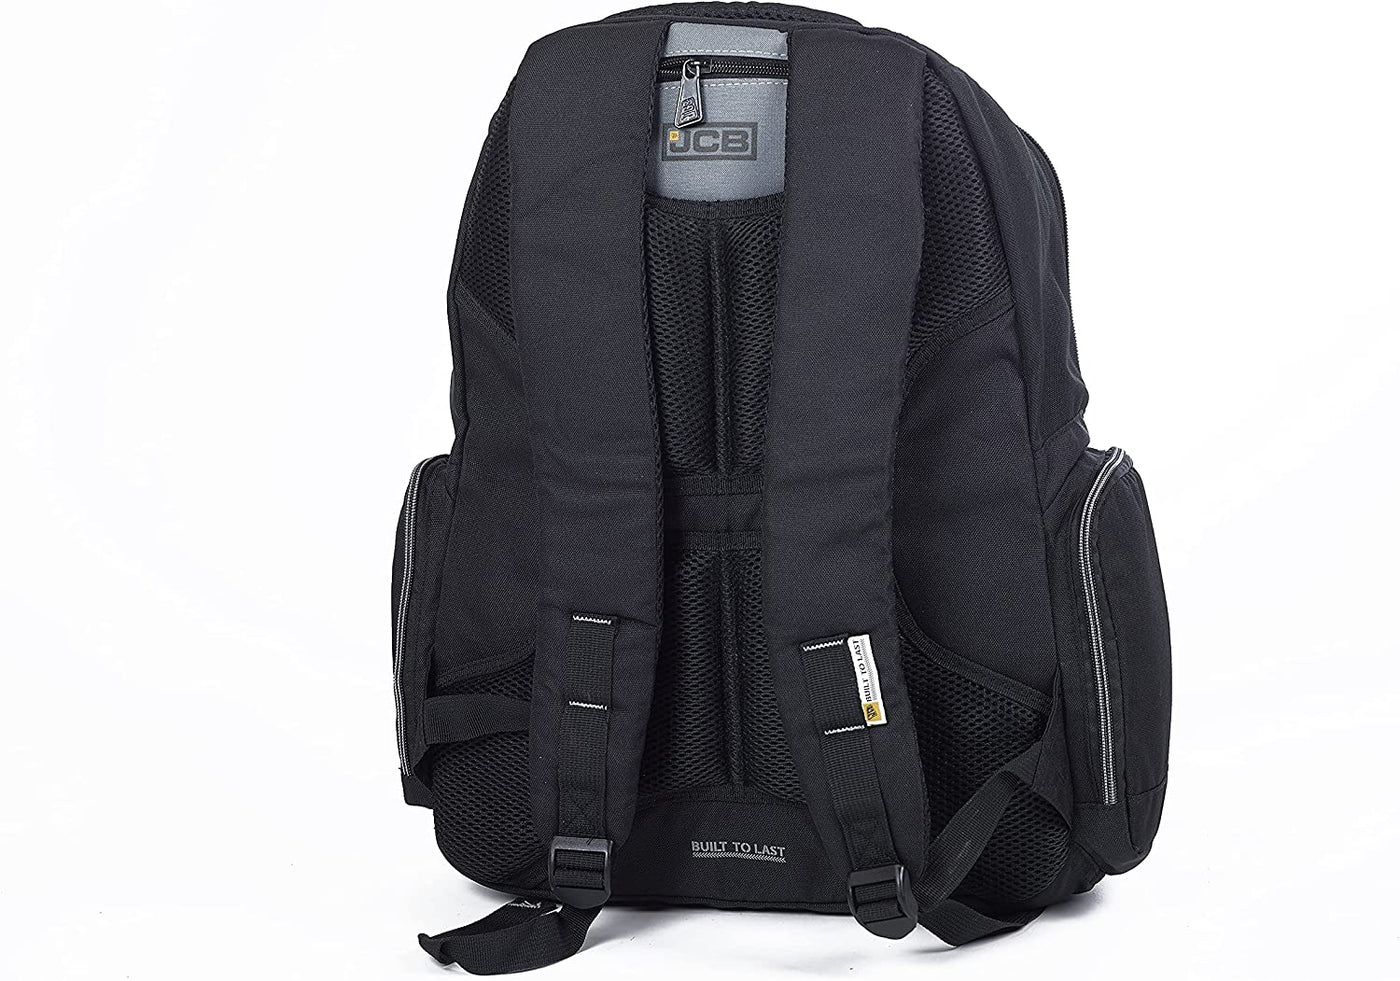 JCB Workman Backpack, Black/Yellow